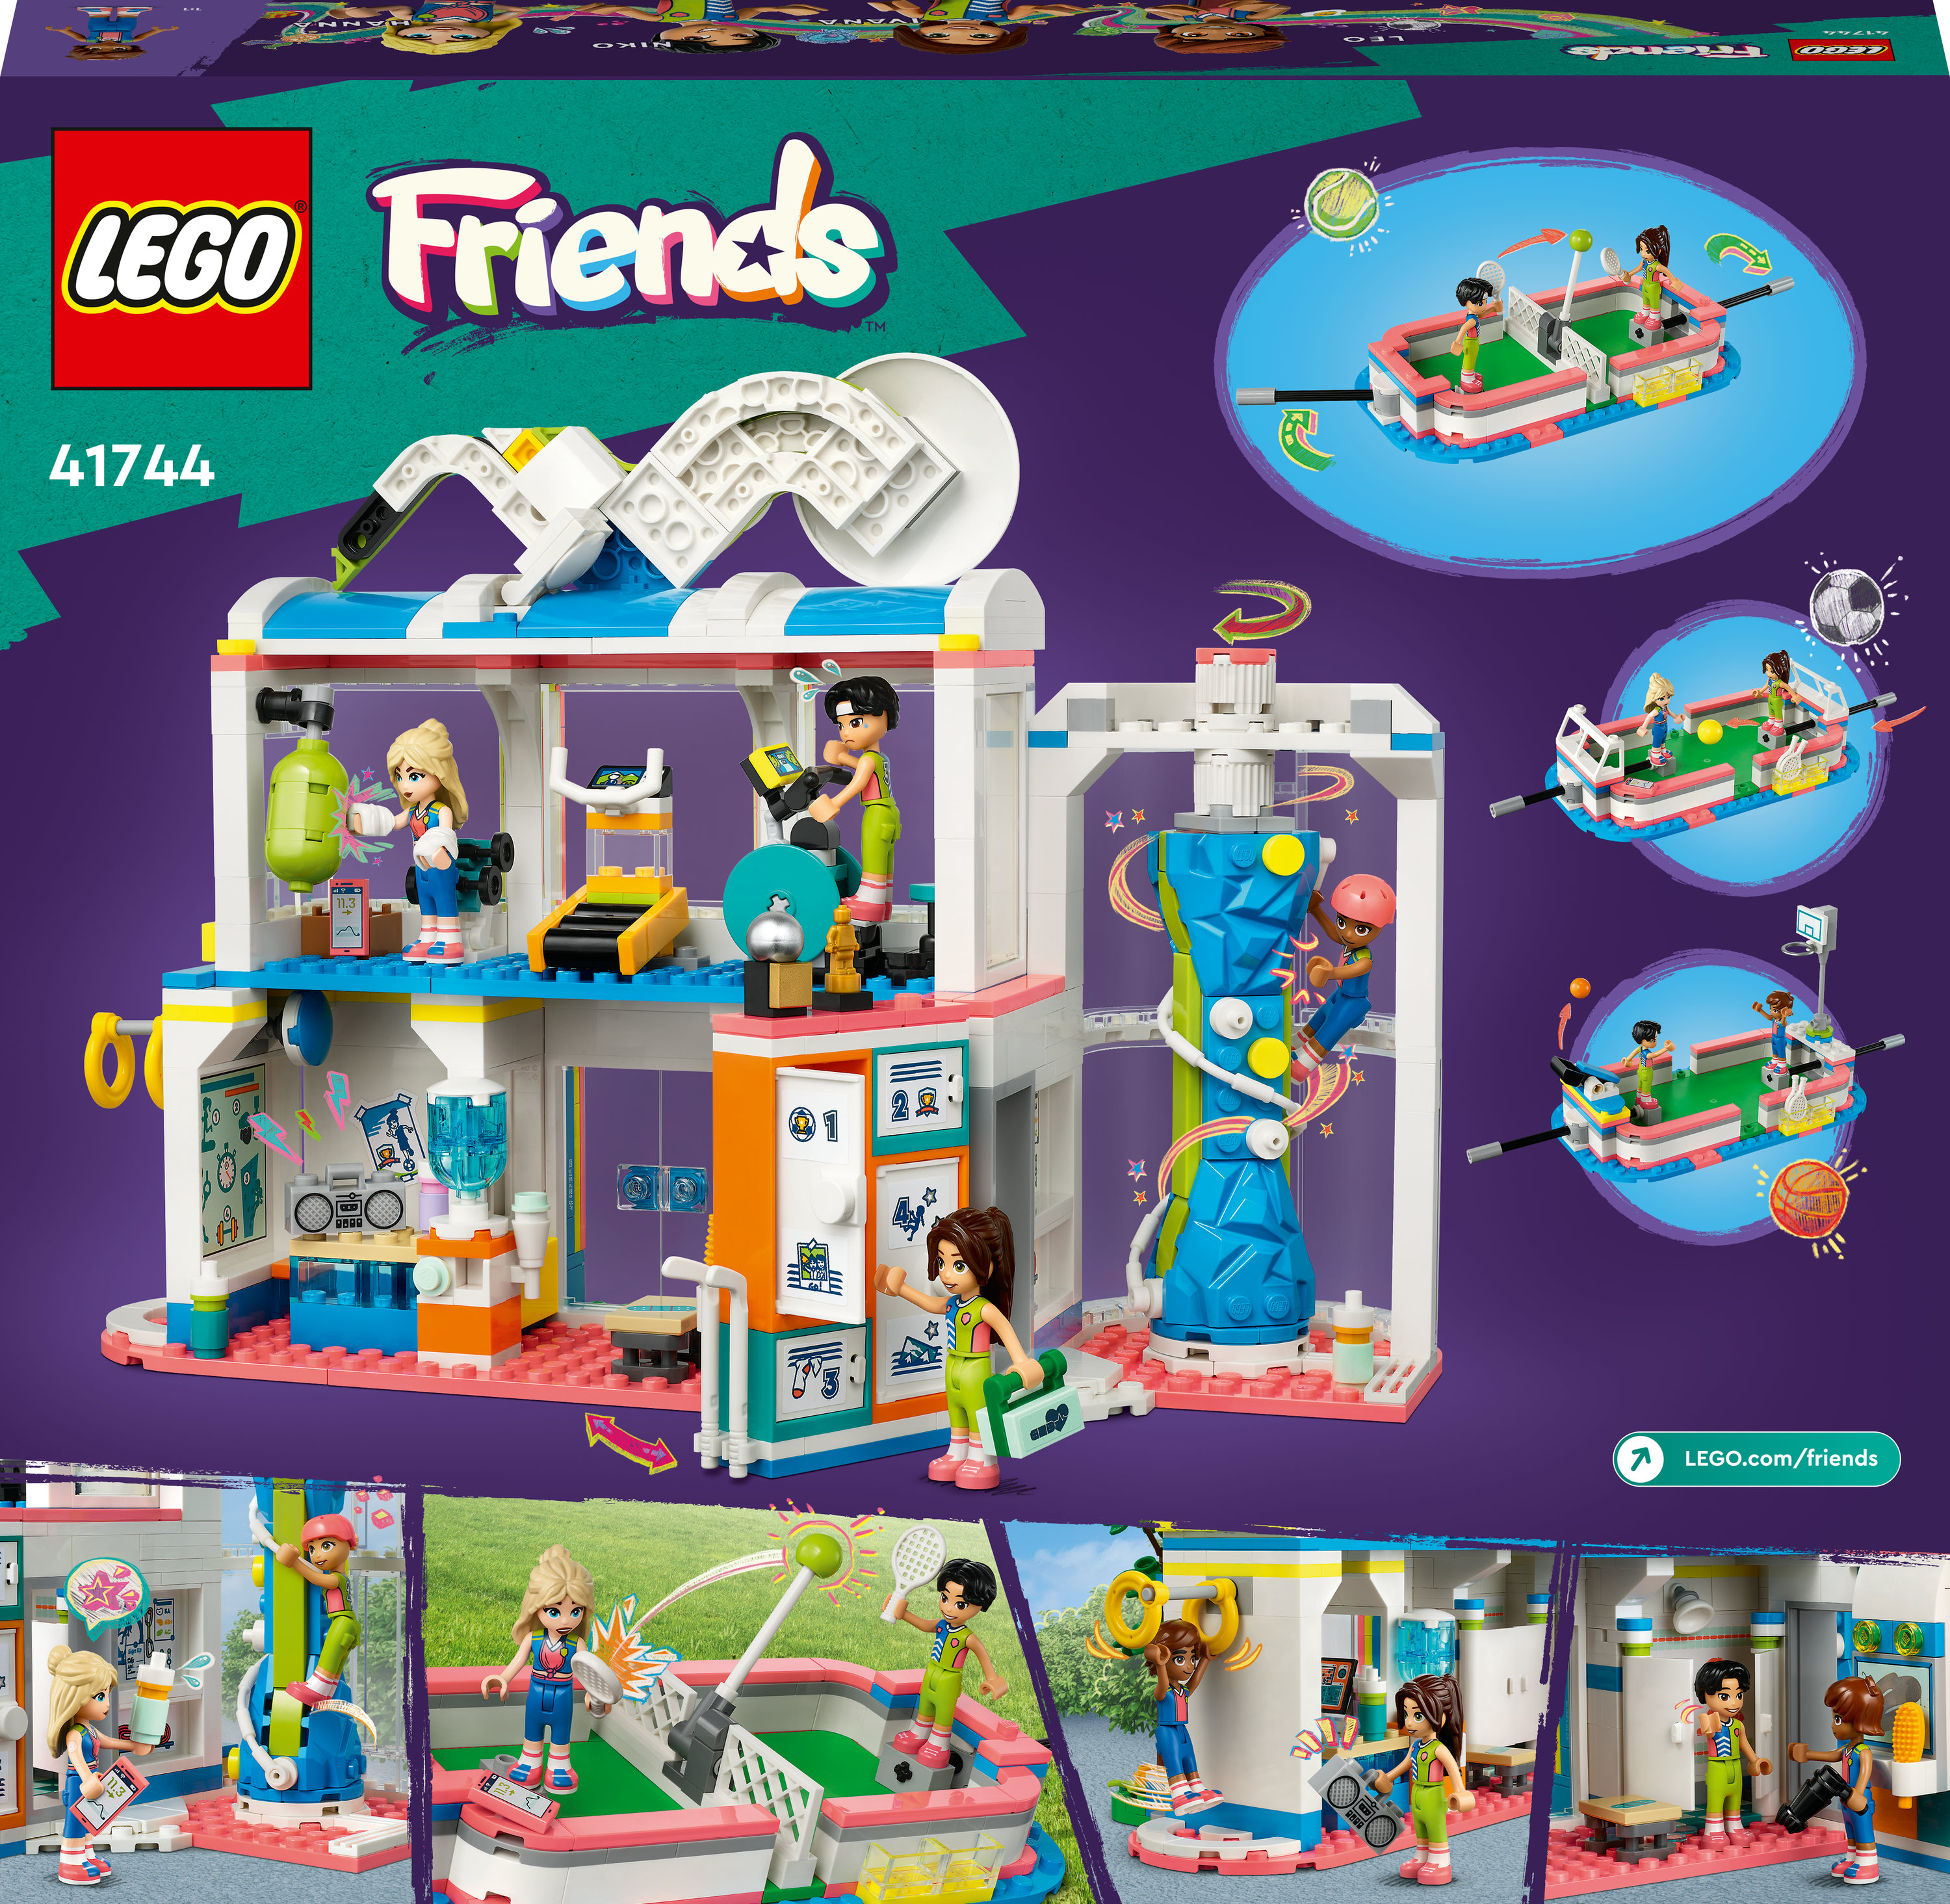 Конструктор LEGO Friends Спорткомплекс, 832 детали (41744) - фото 9